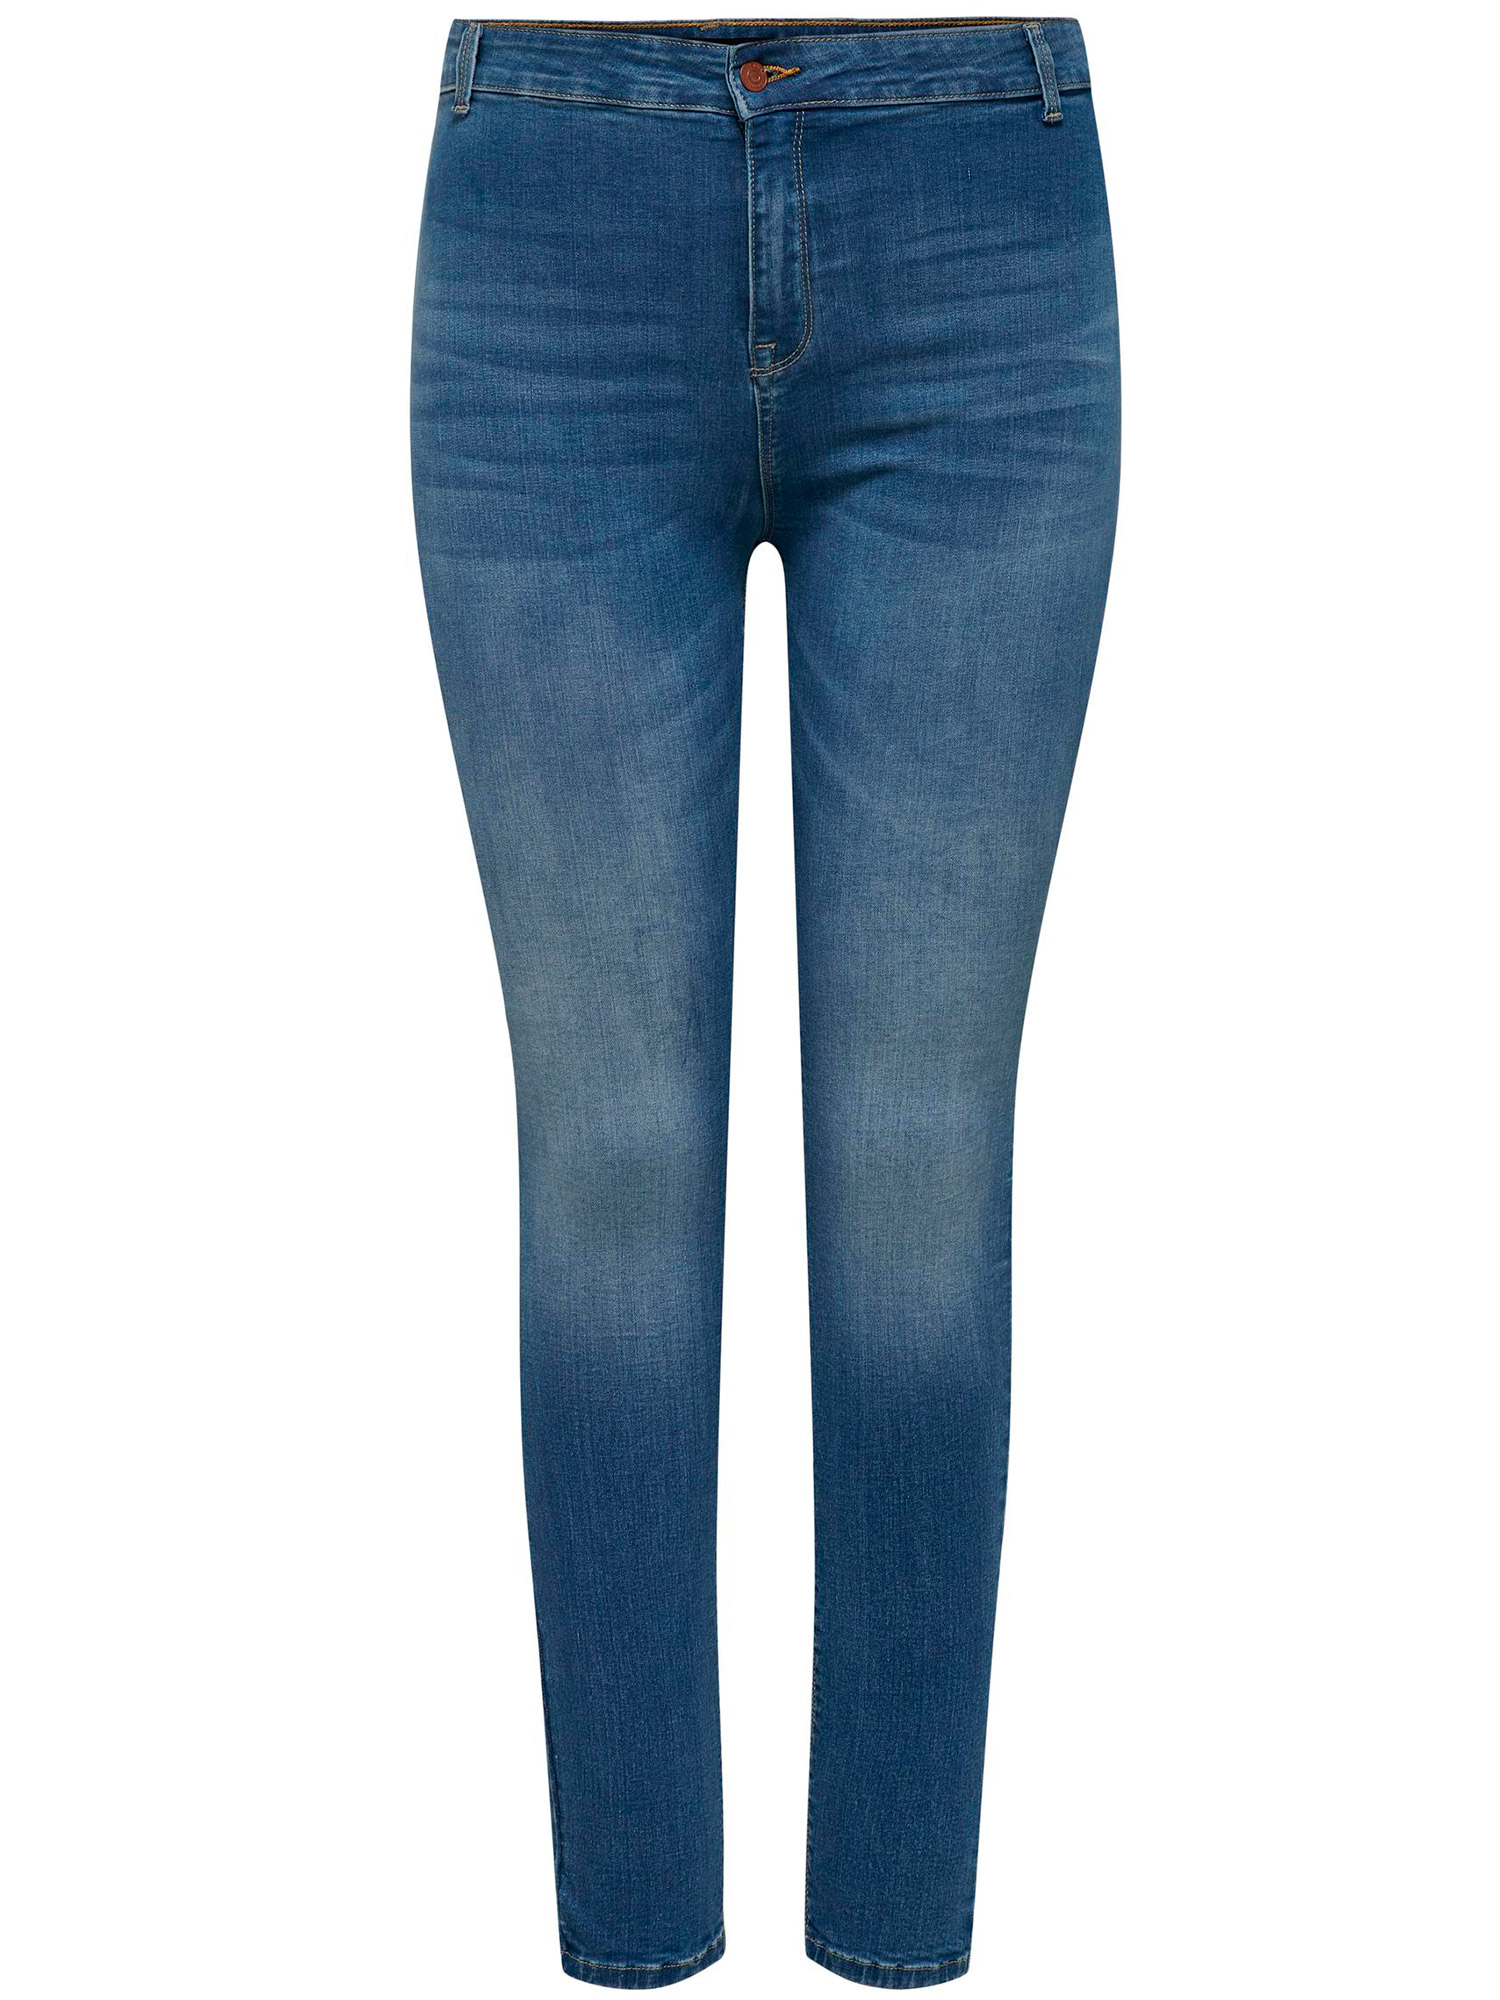 HUBA - Blå jeans i super stretch med smalle ben fra Only Carmakoma